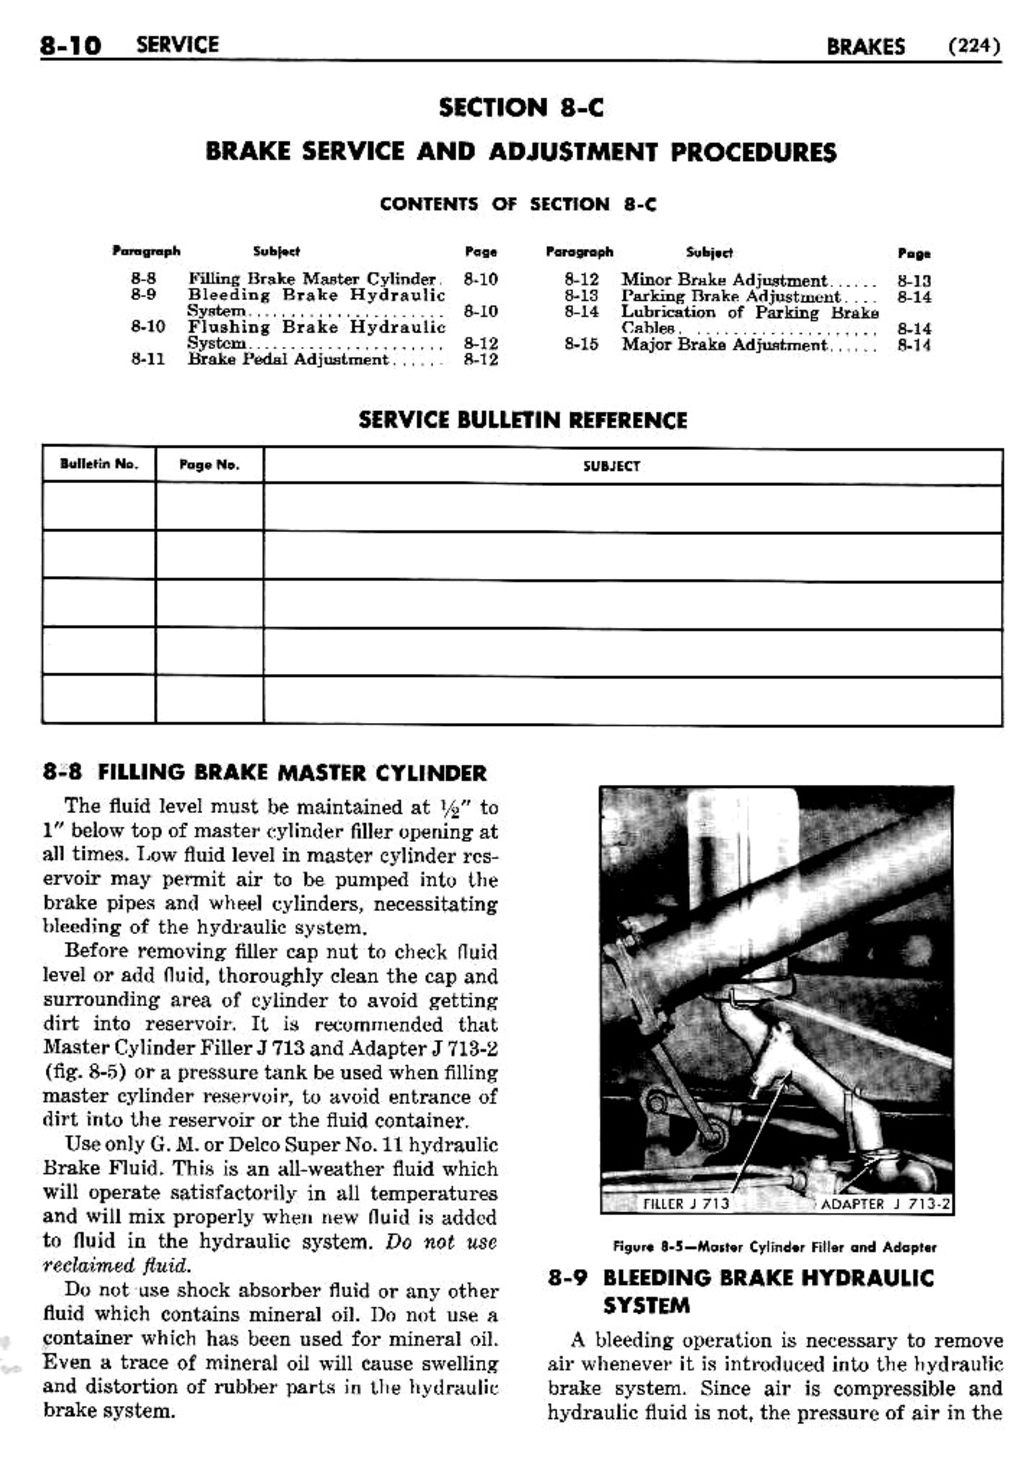 n_09 1950 Buick Shop Manual - Brakes-010-010.jpg